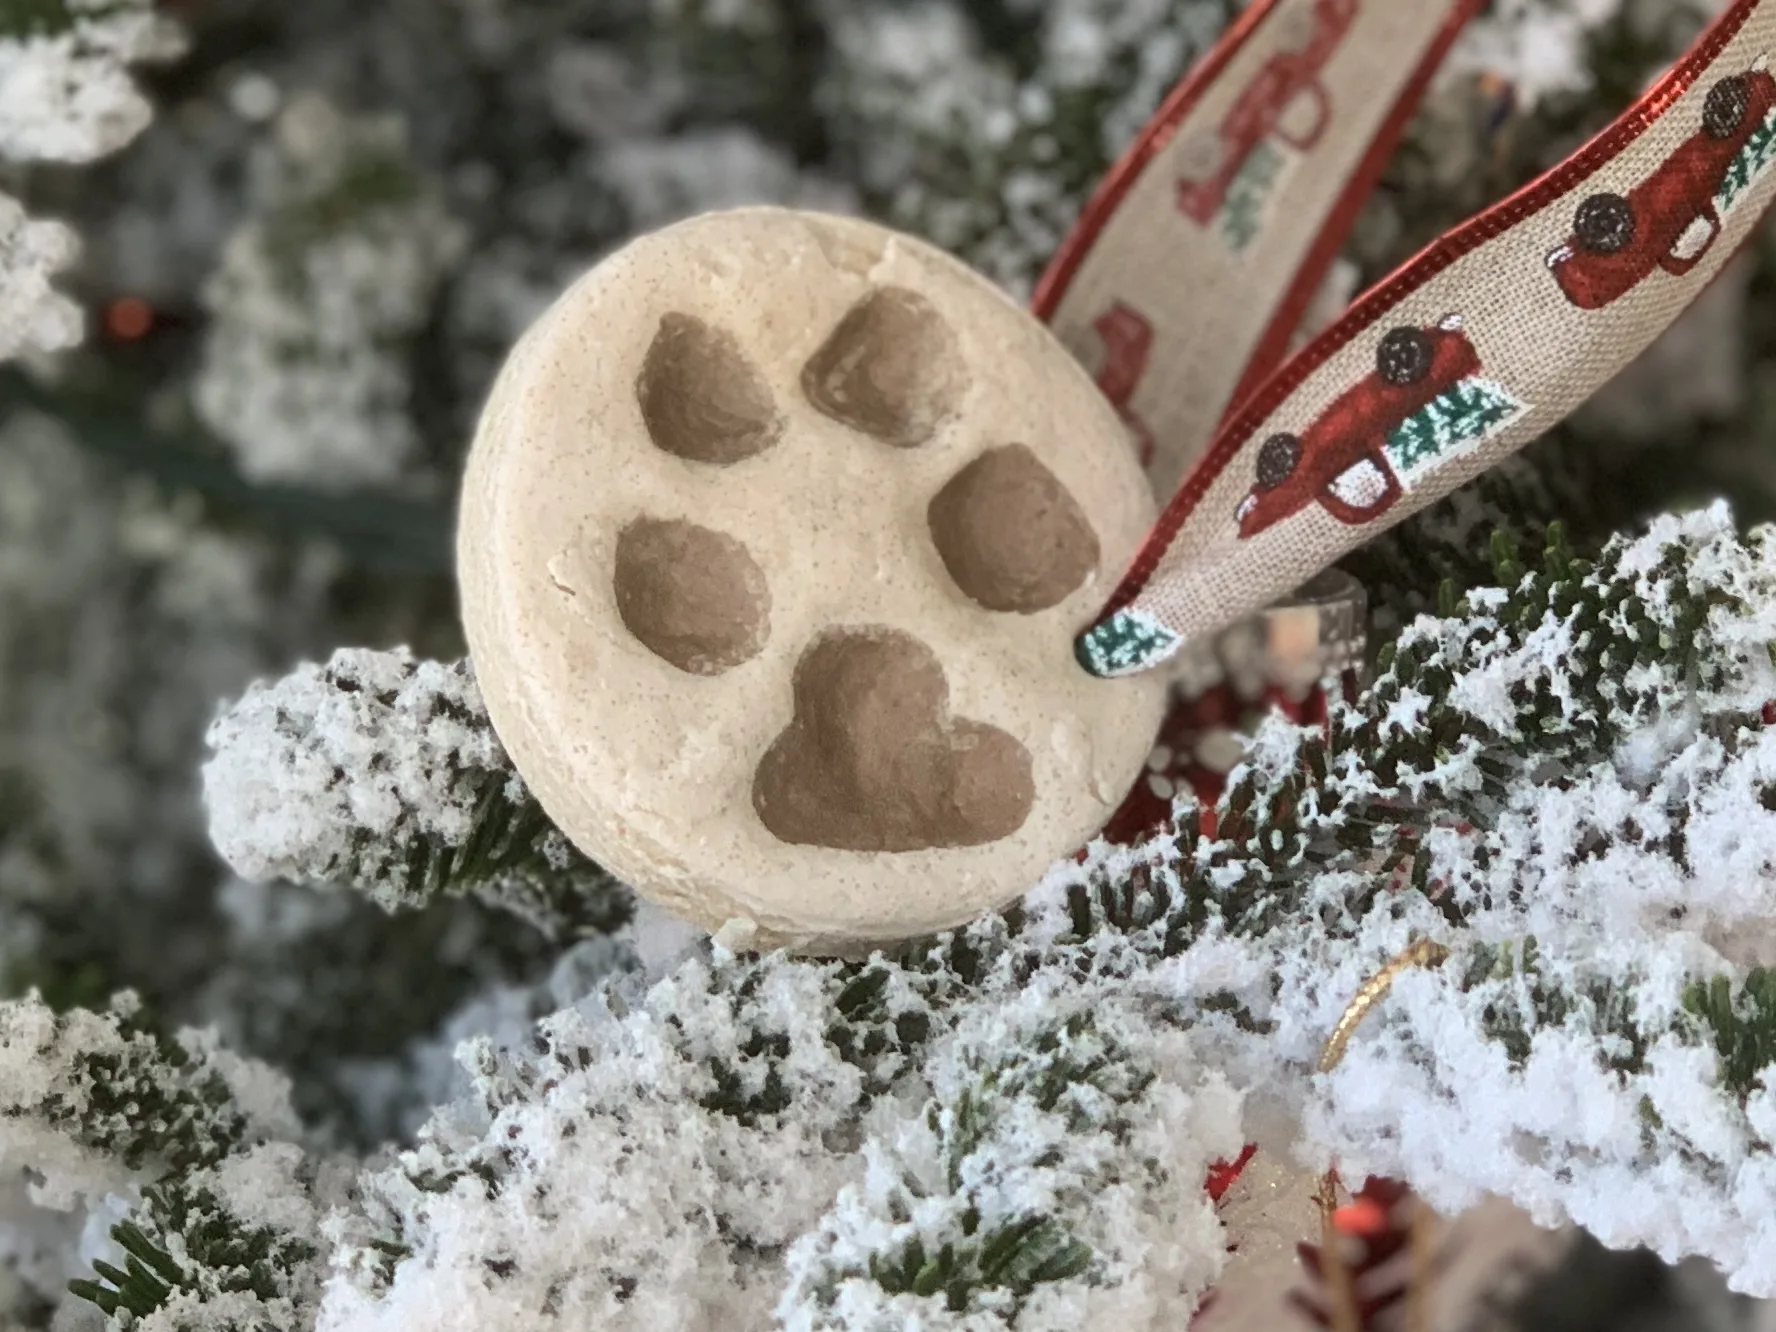 How to make a homemade paw print Christmas ornament